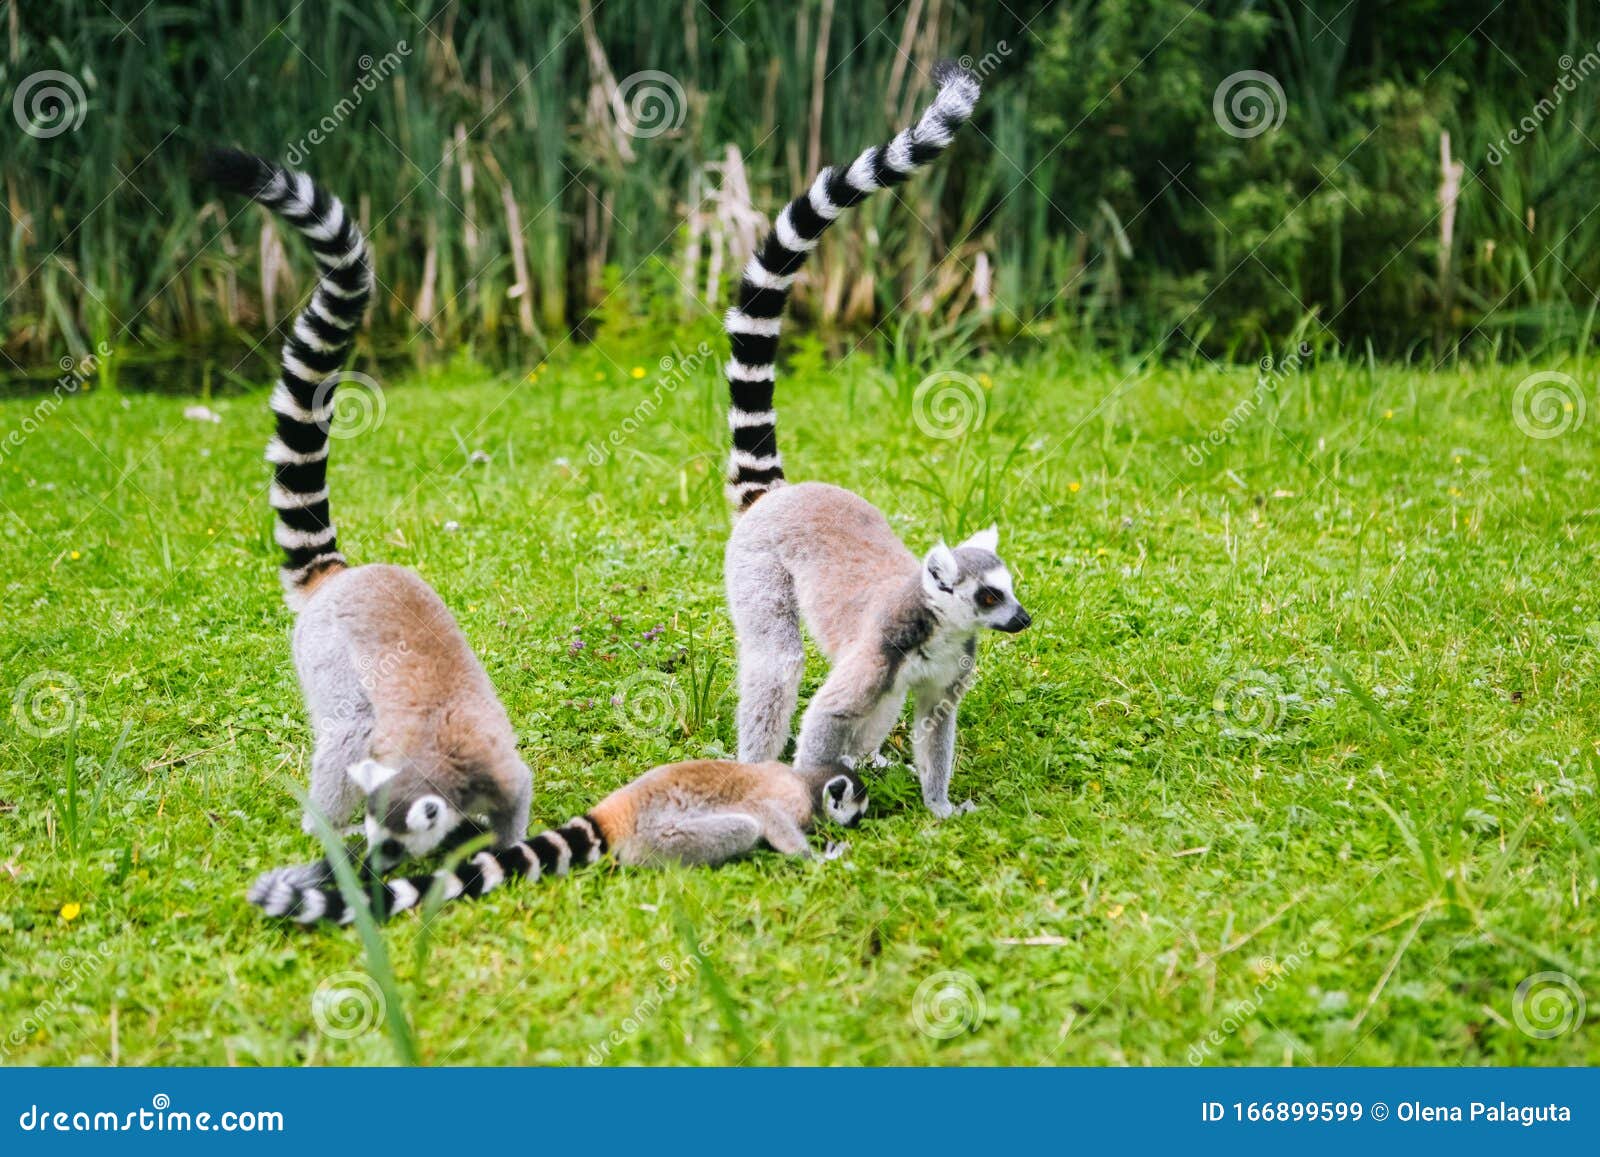 Ring-tailed Lemur Family on the Grass Stock Image - Image of monkeys, animal:  166899599